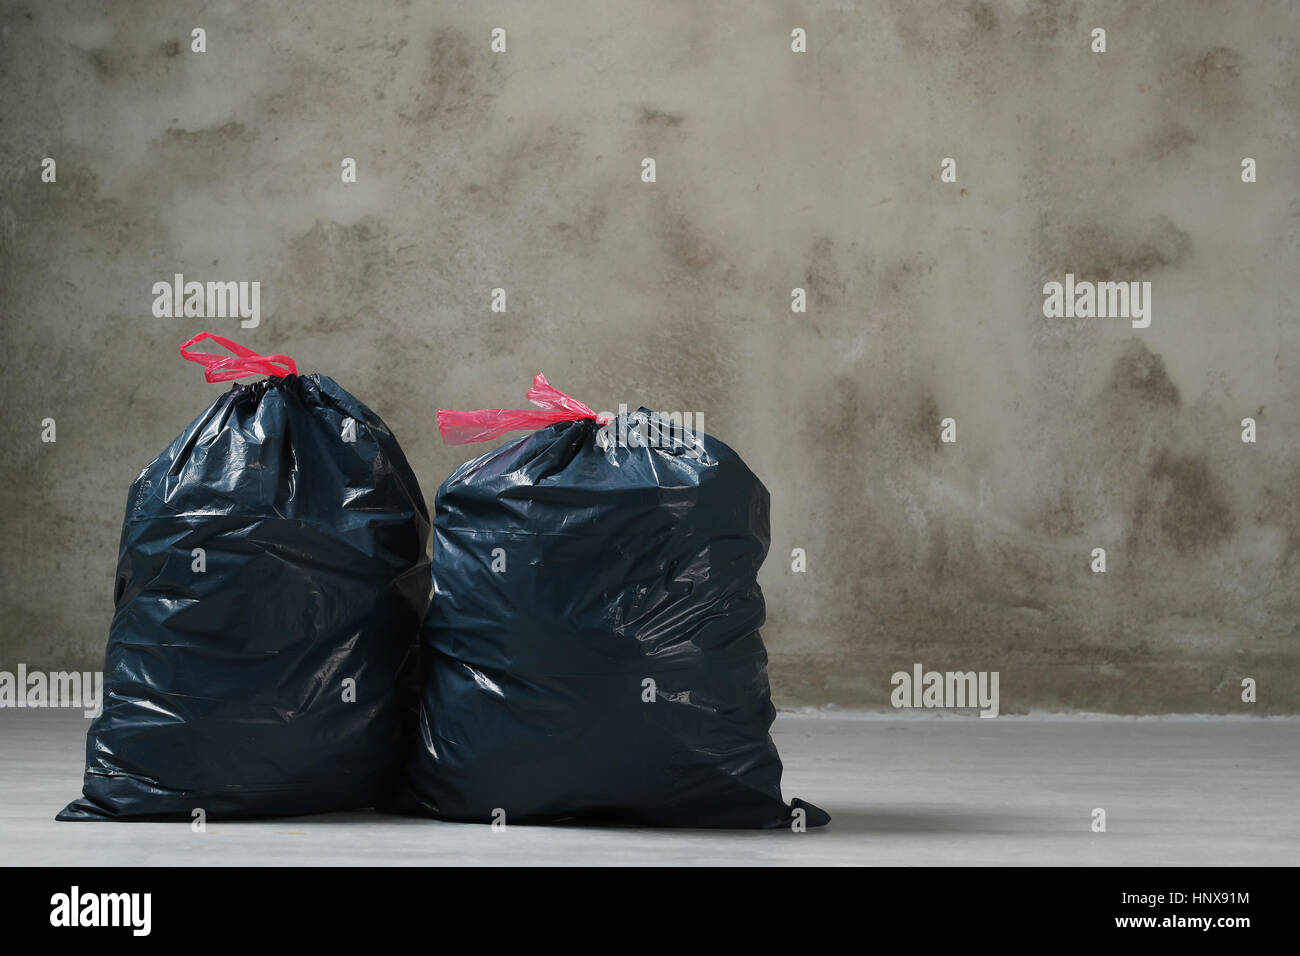 https://c8.alamy.com/comp/HNX91M/pollution-trash-bags-on-the-floor-HNX91M.jpg